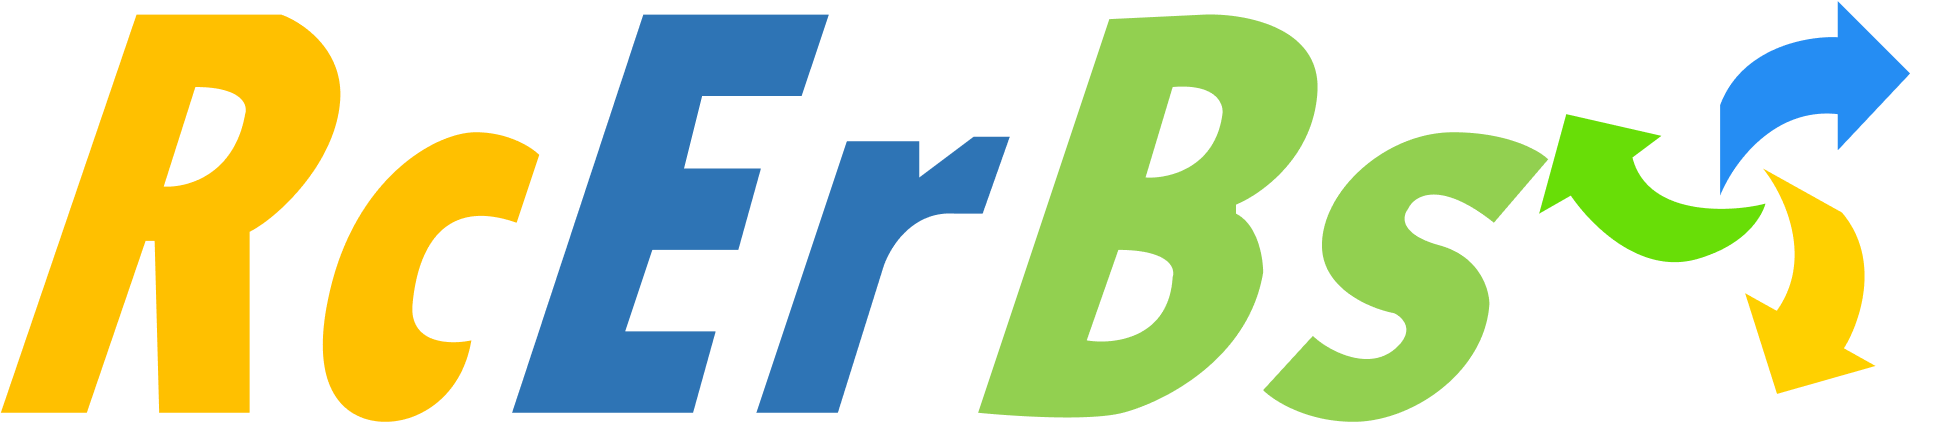  logo1 